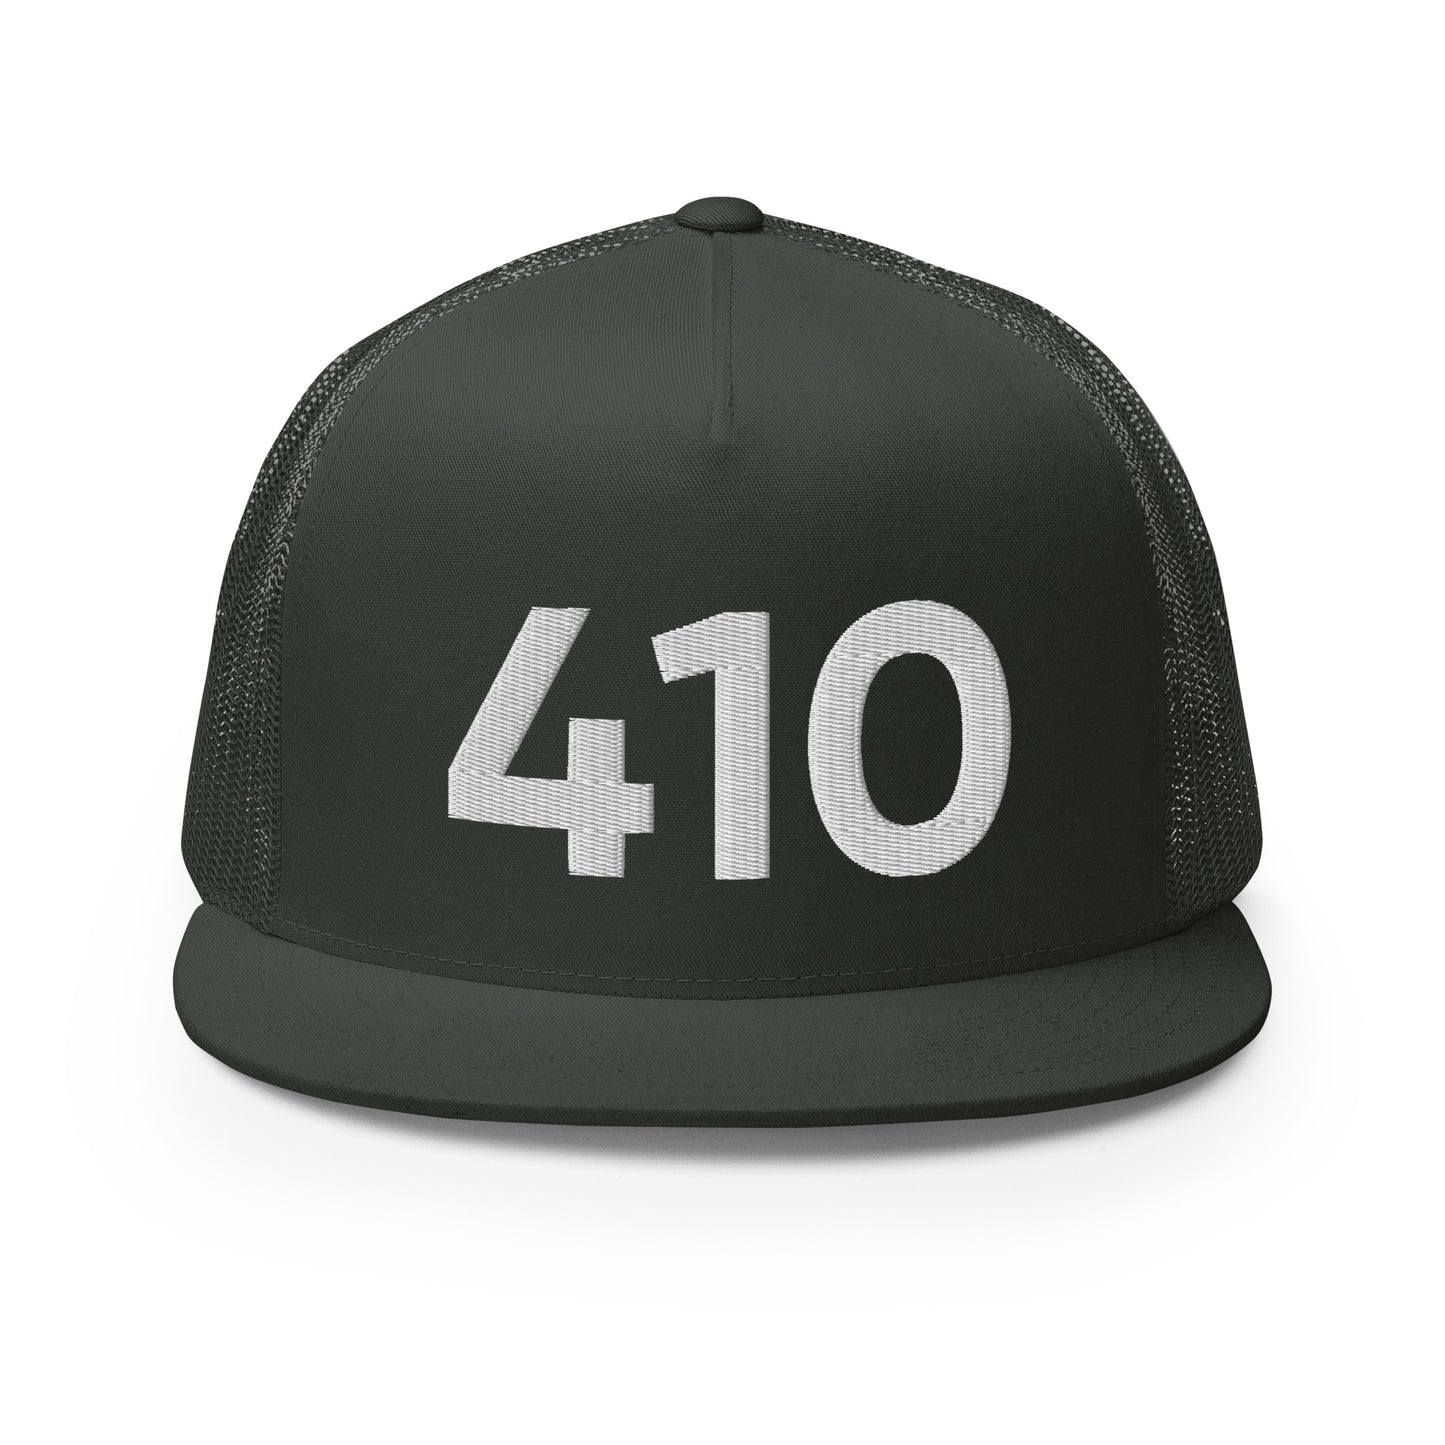 410 Baltimore Trucker Hat